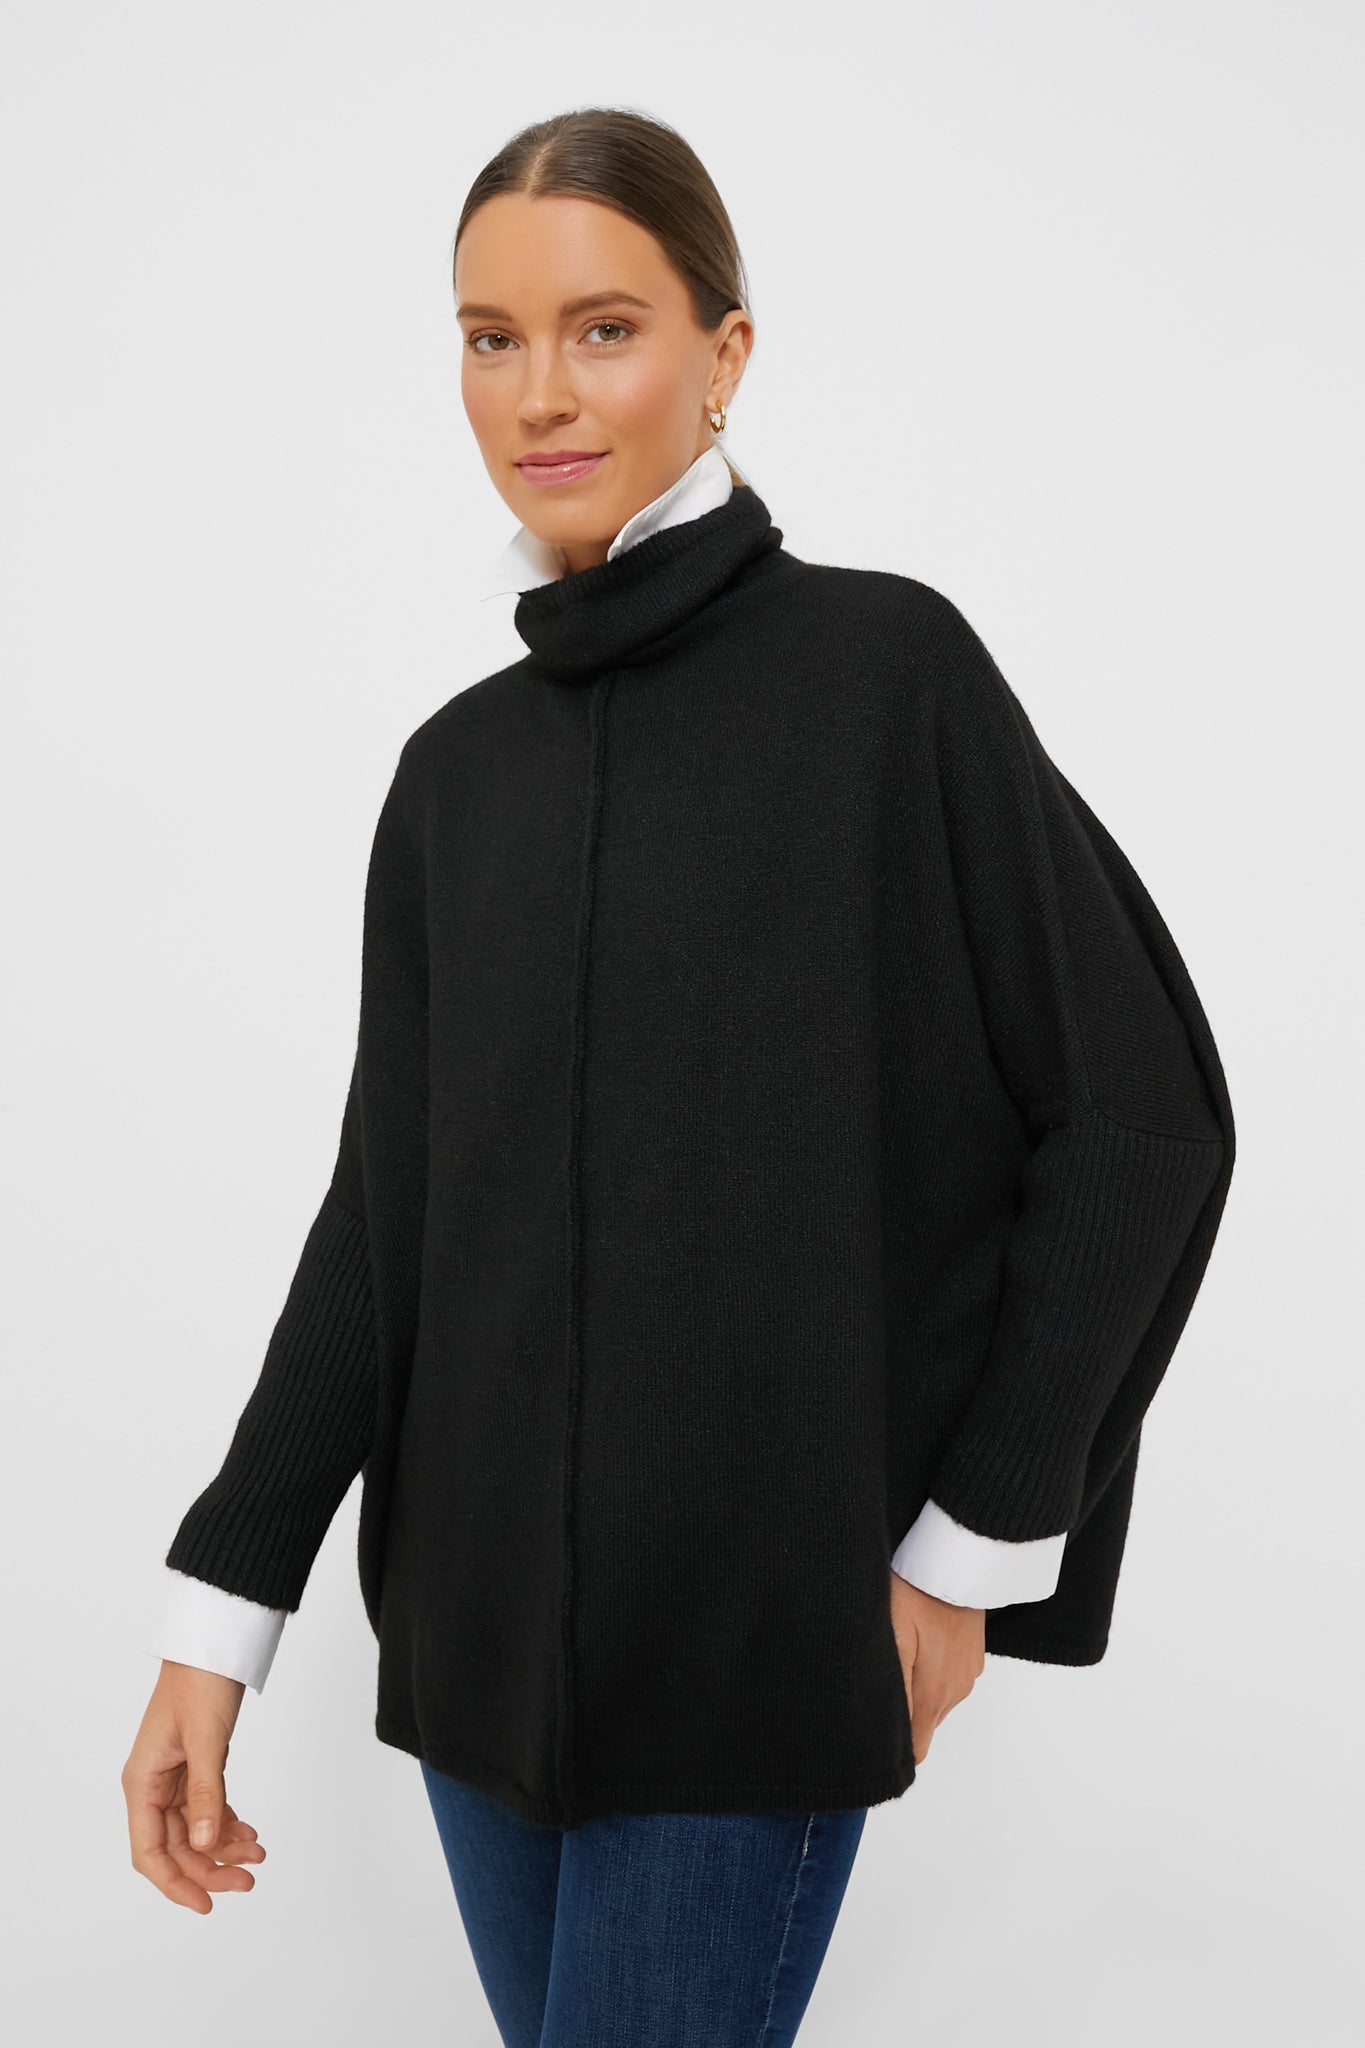 Exclusive Black Turtleneck Soft Sweater